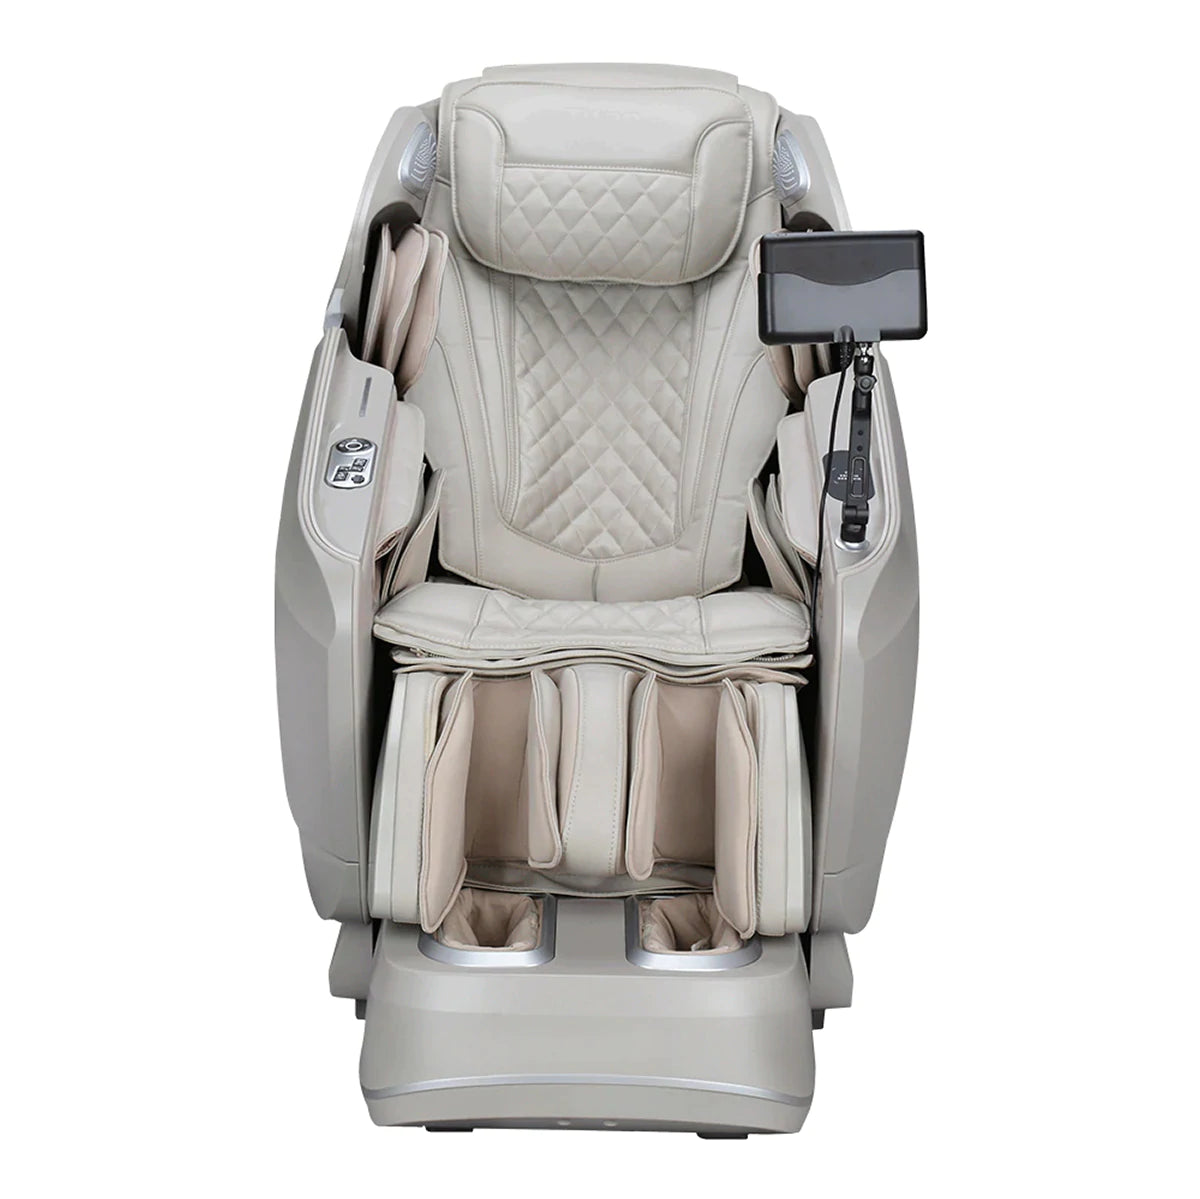 Titan Pro-Vigor 4D Massage Chair - Free 5 Year Extended Warranty